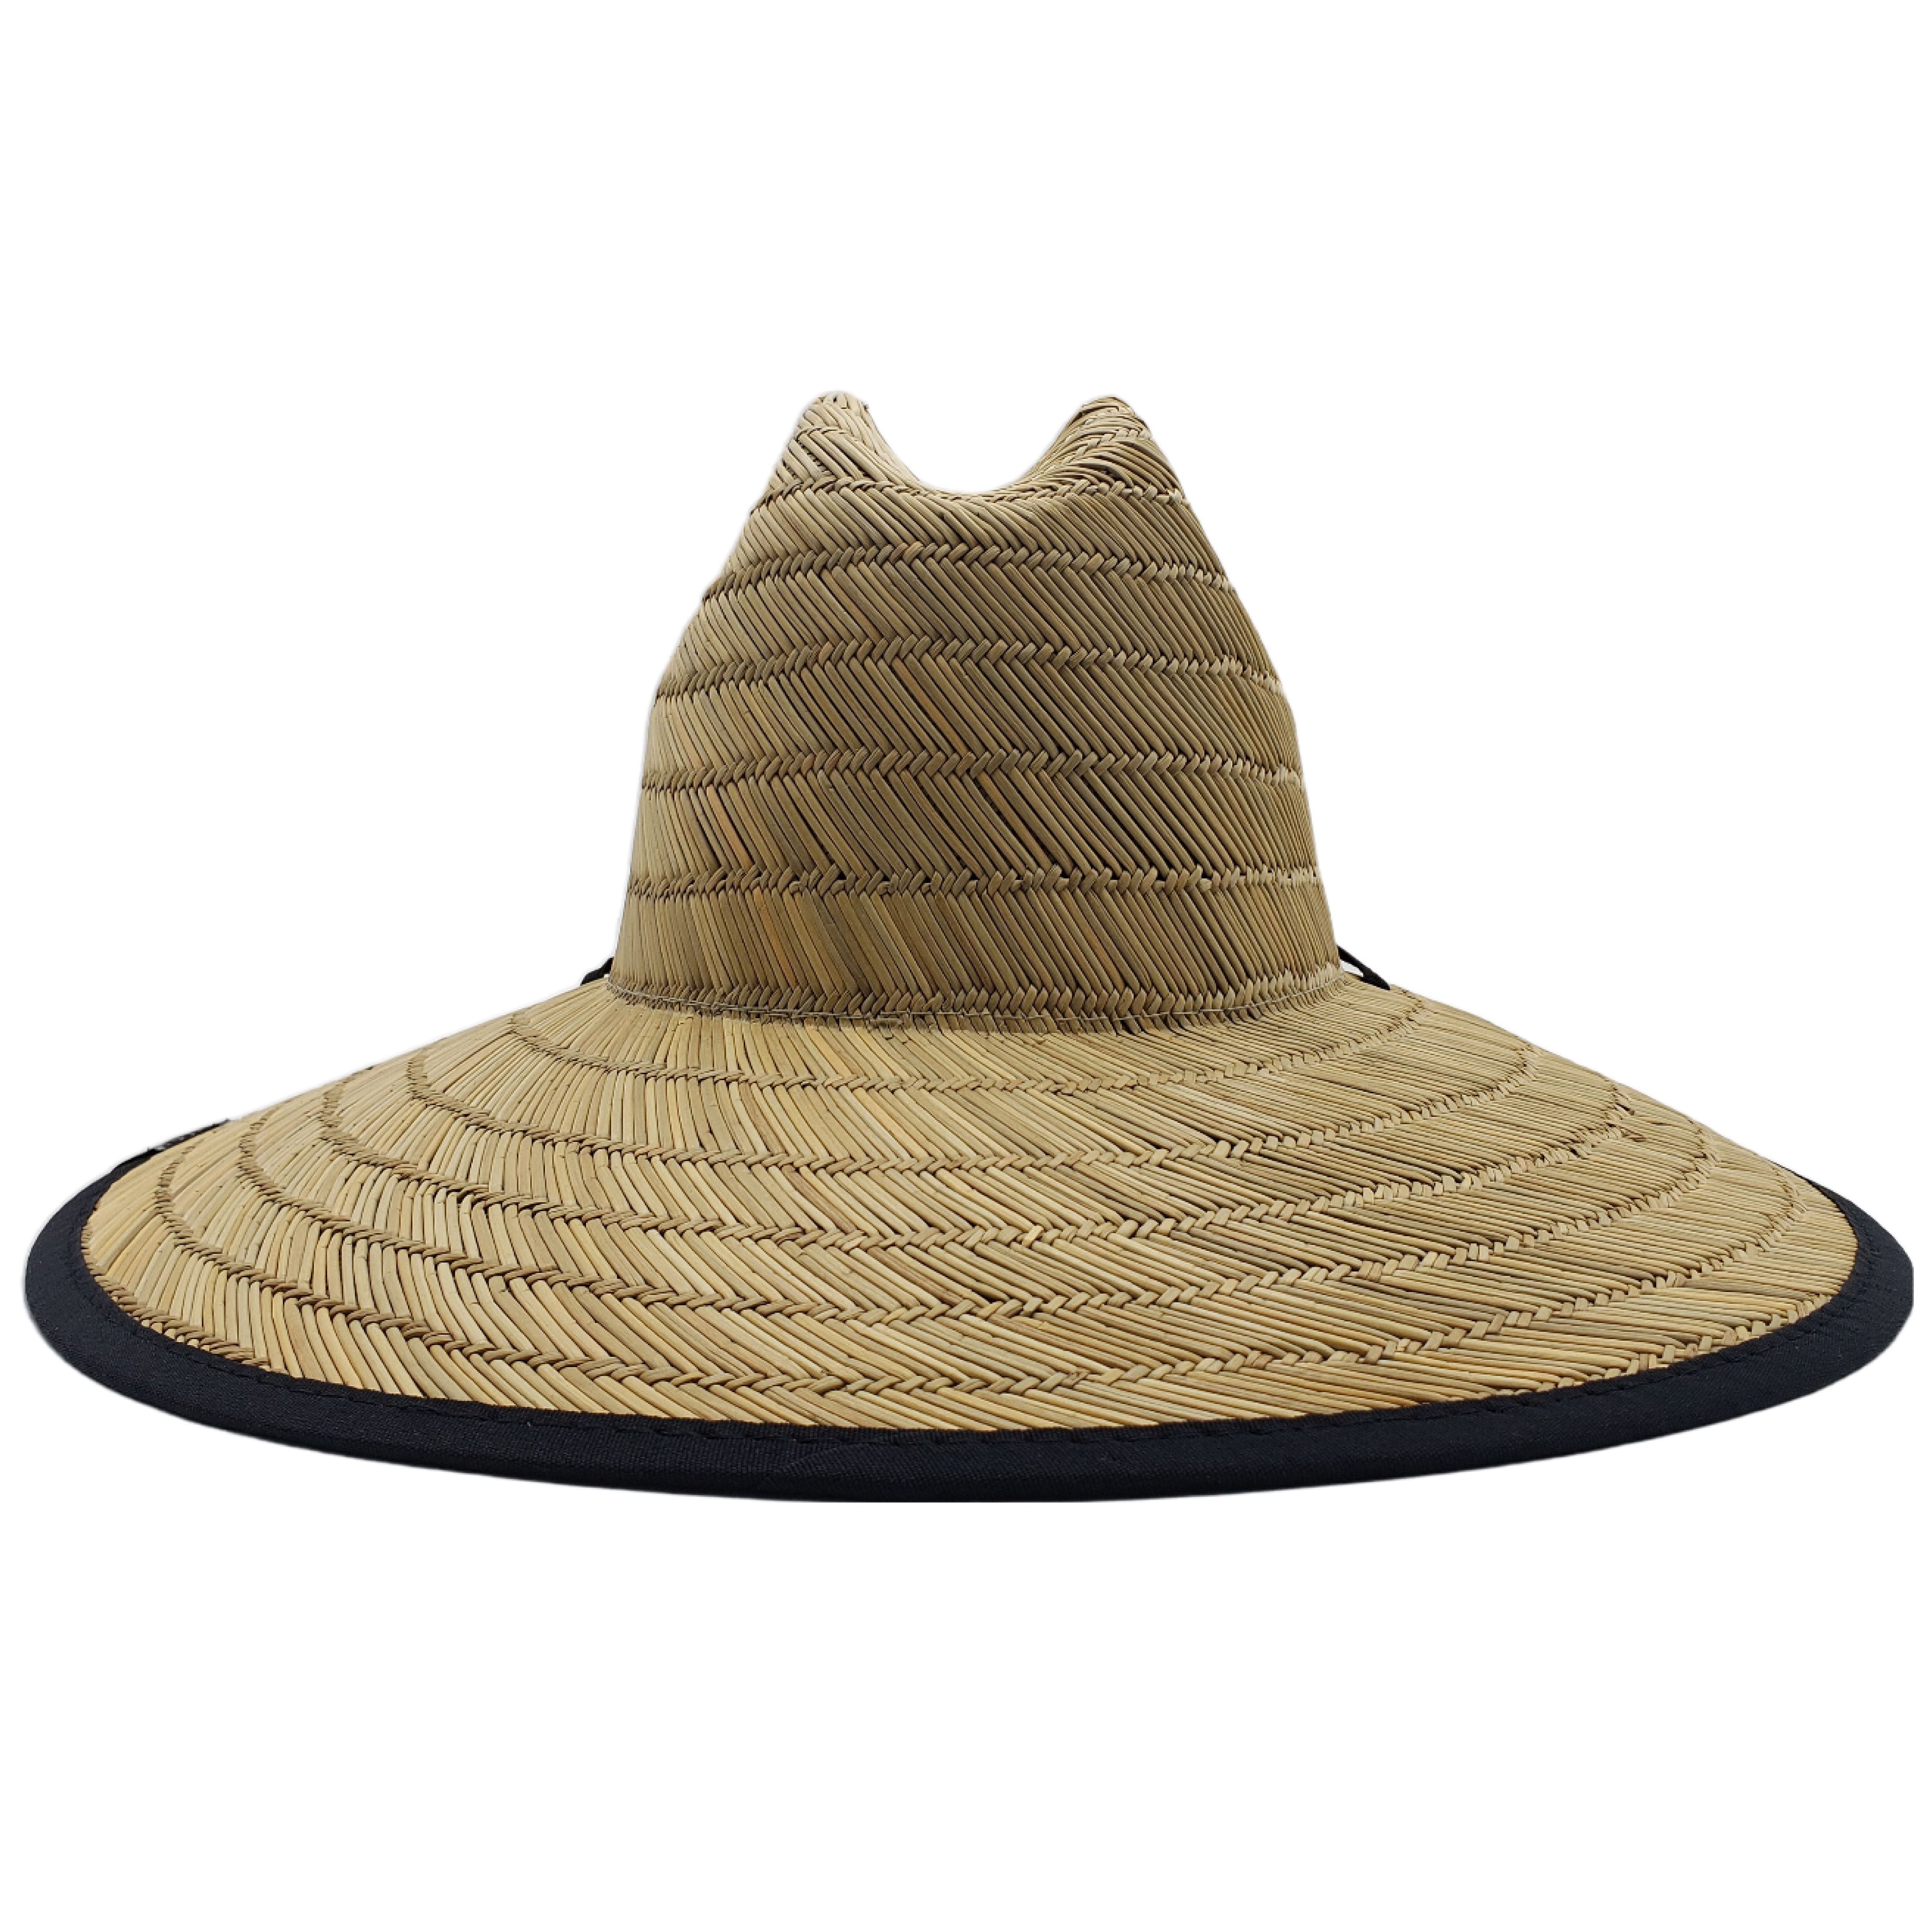 Qwave Narrow Weave Lifeguards Hats - Each